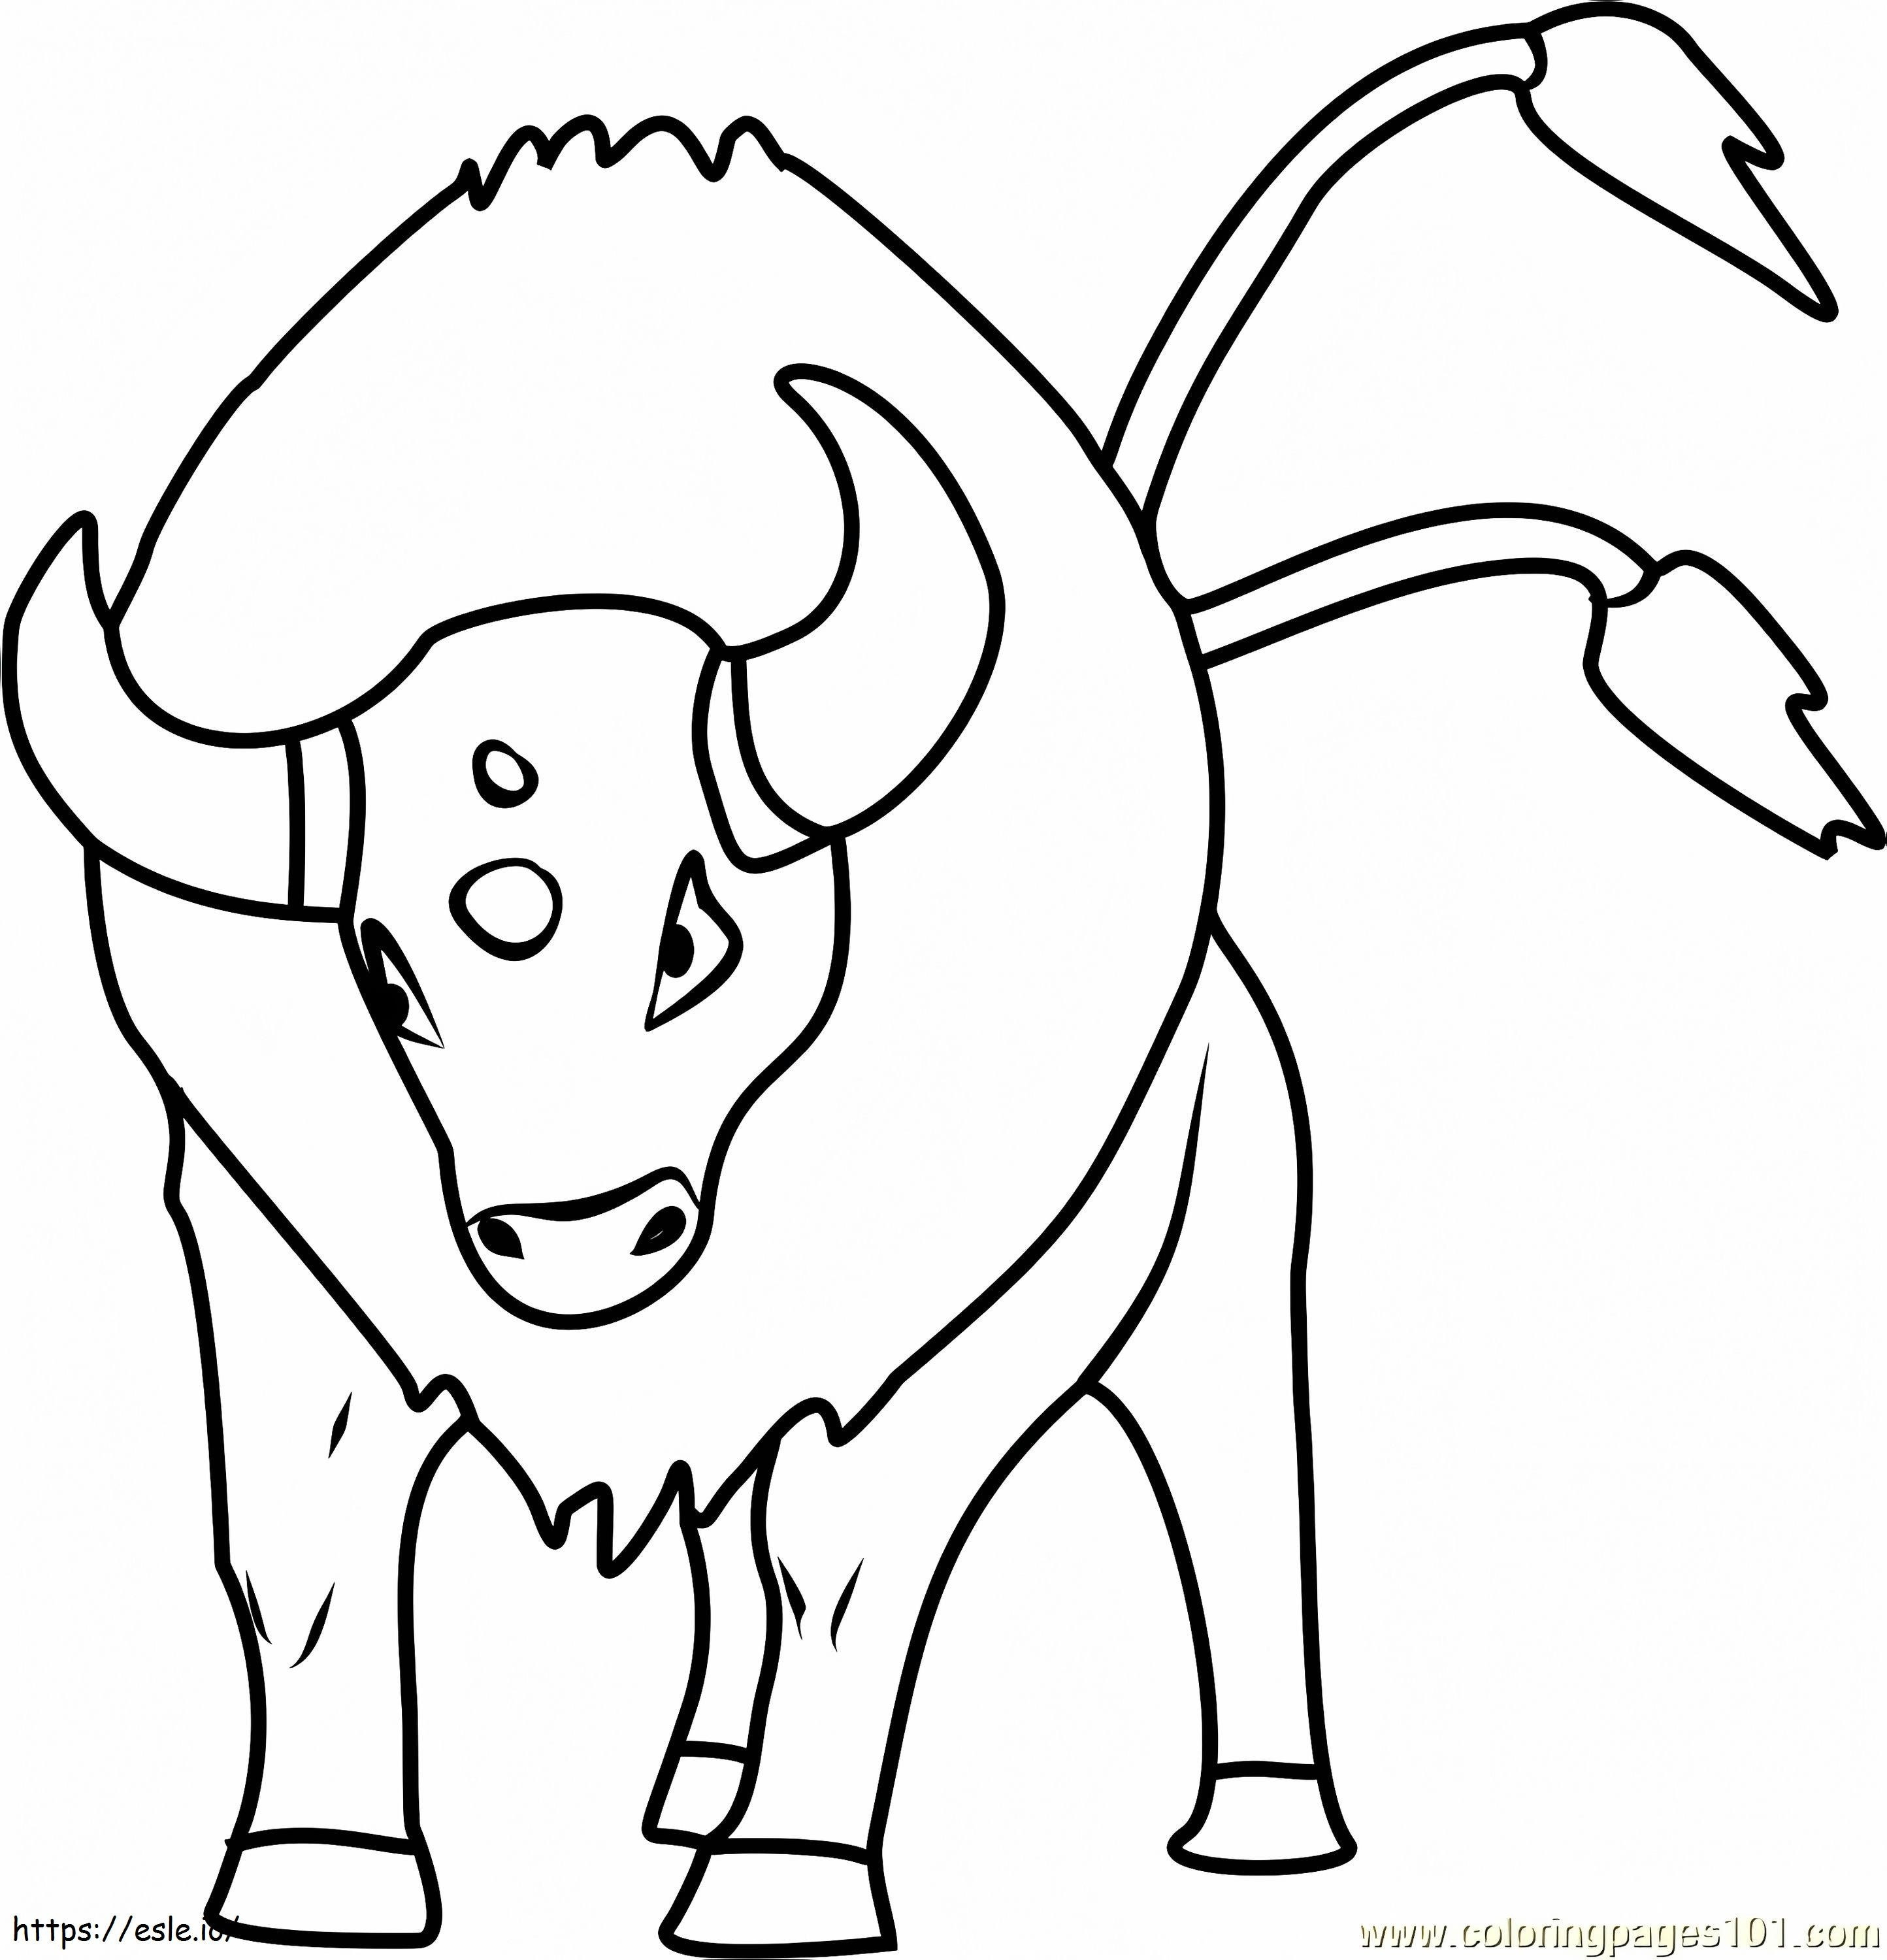 Bulls Pokemon Go1 coloring page